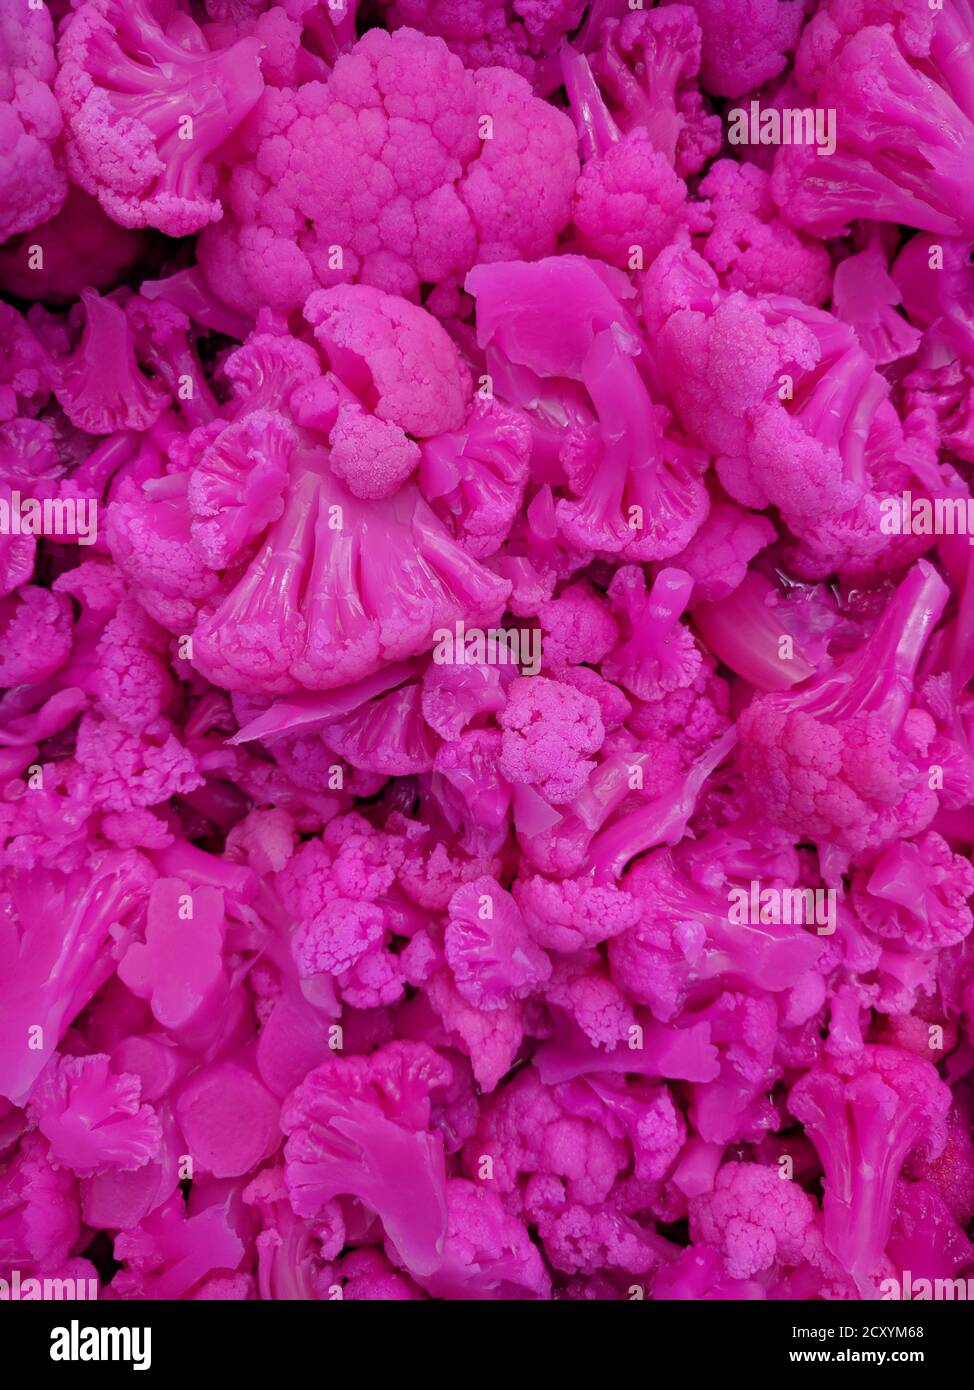 Fucsia pink cauliflower fills the screen Stock Photo